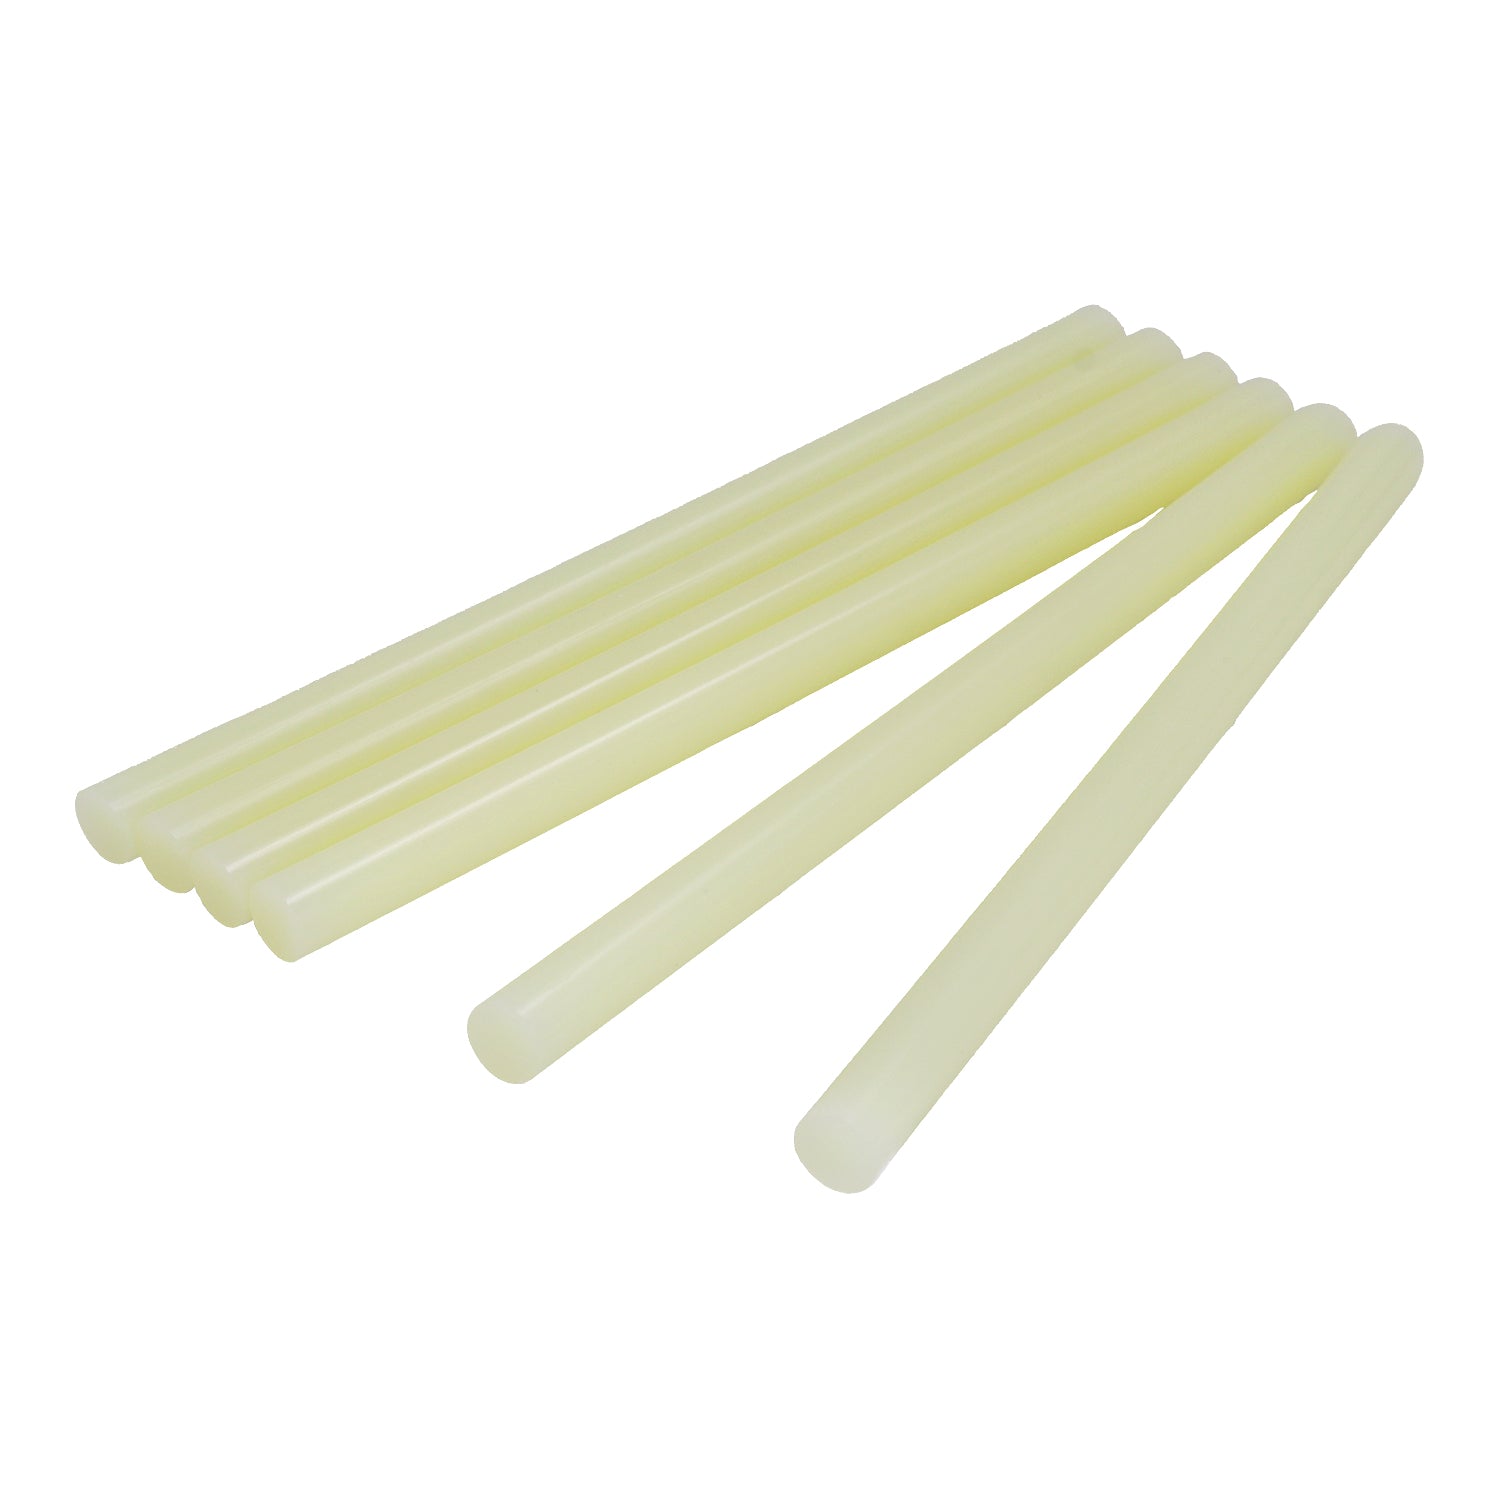 GlueSticksDirect Economy® Twin Pack Hot Melt Glue Sticks 7/16 X